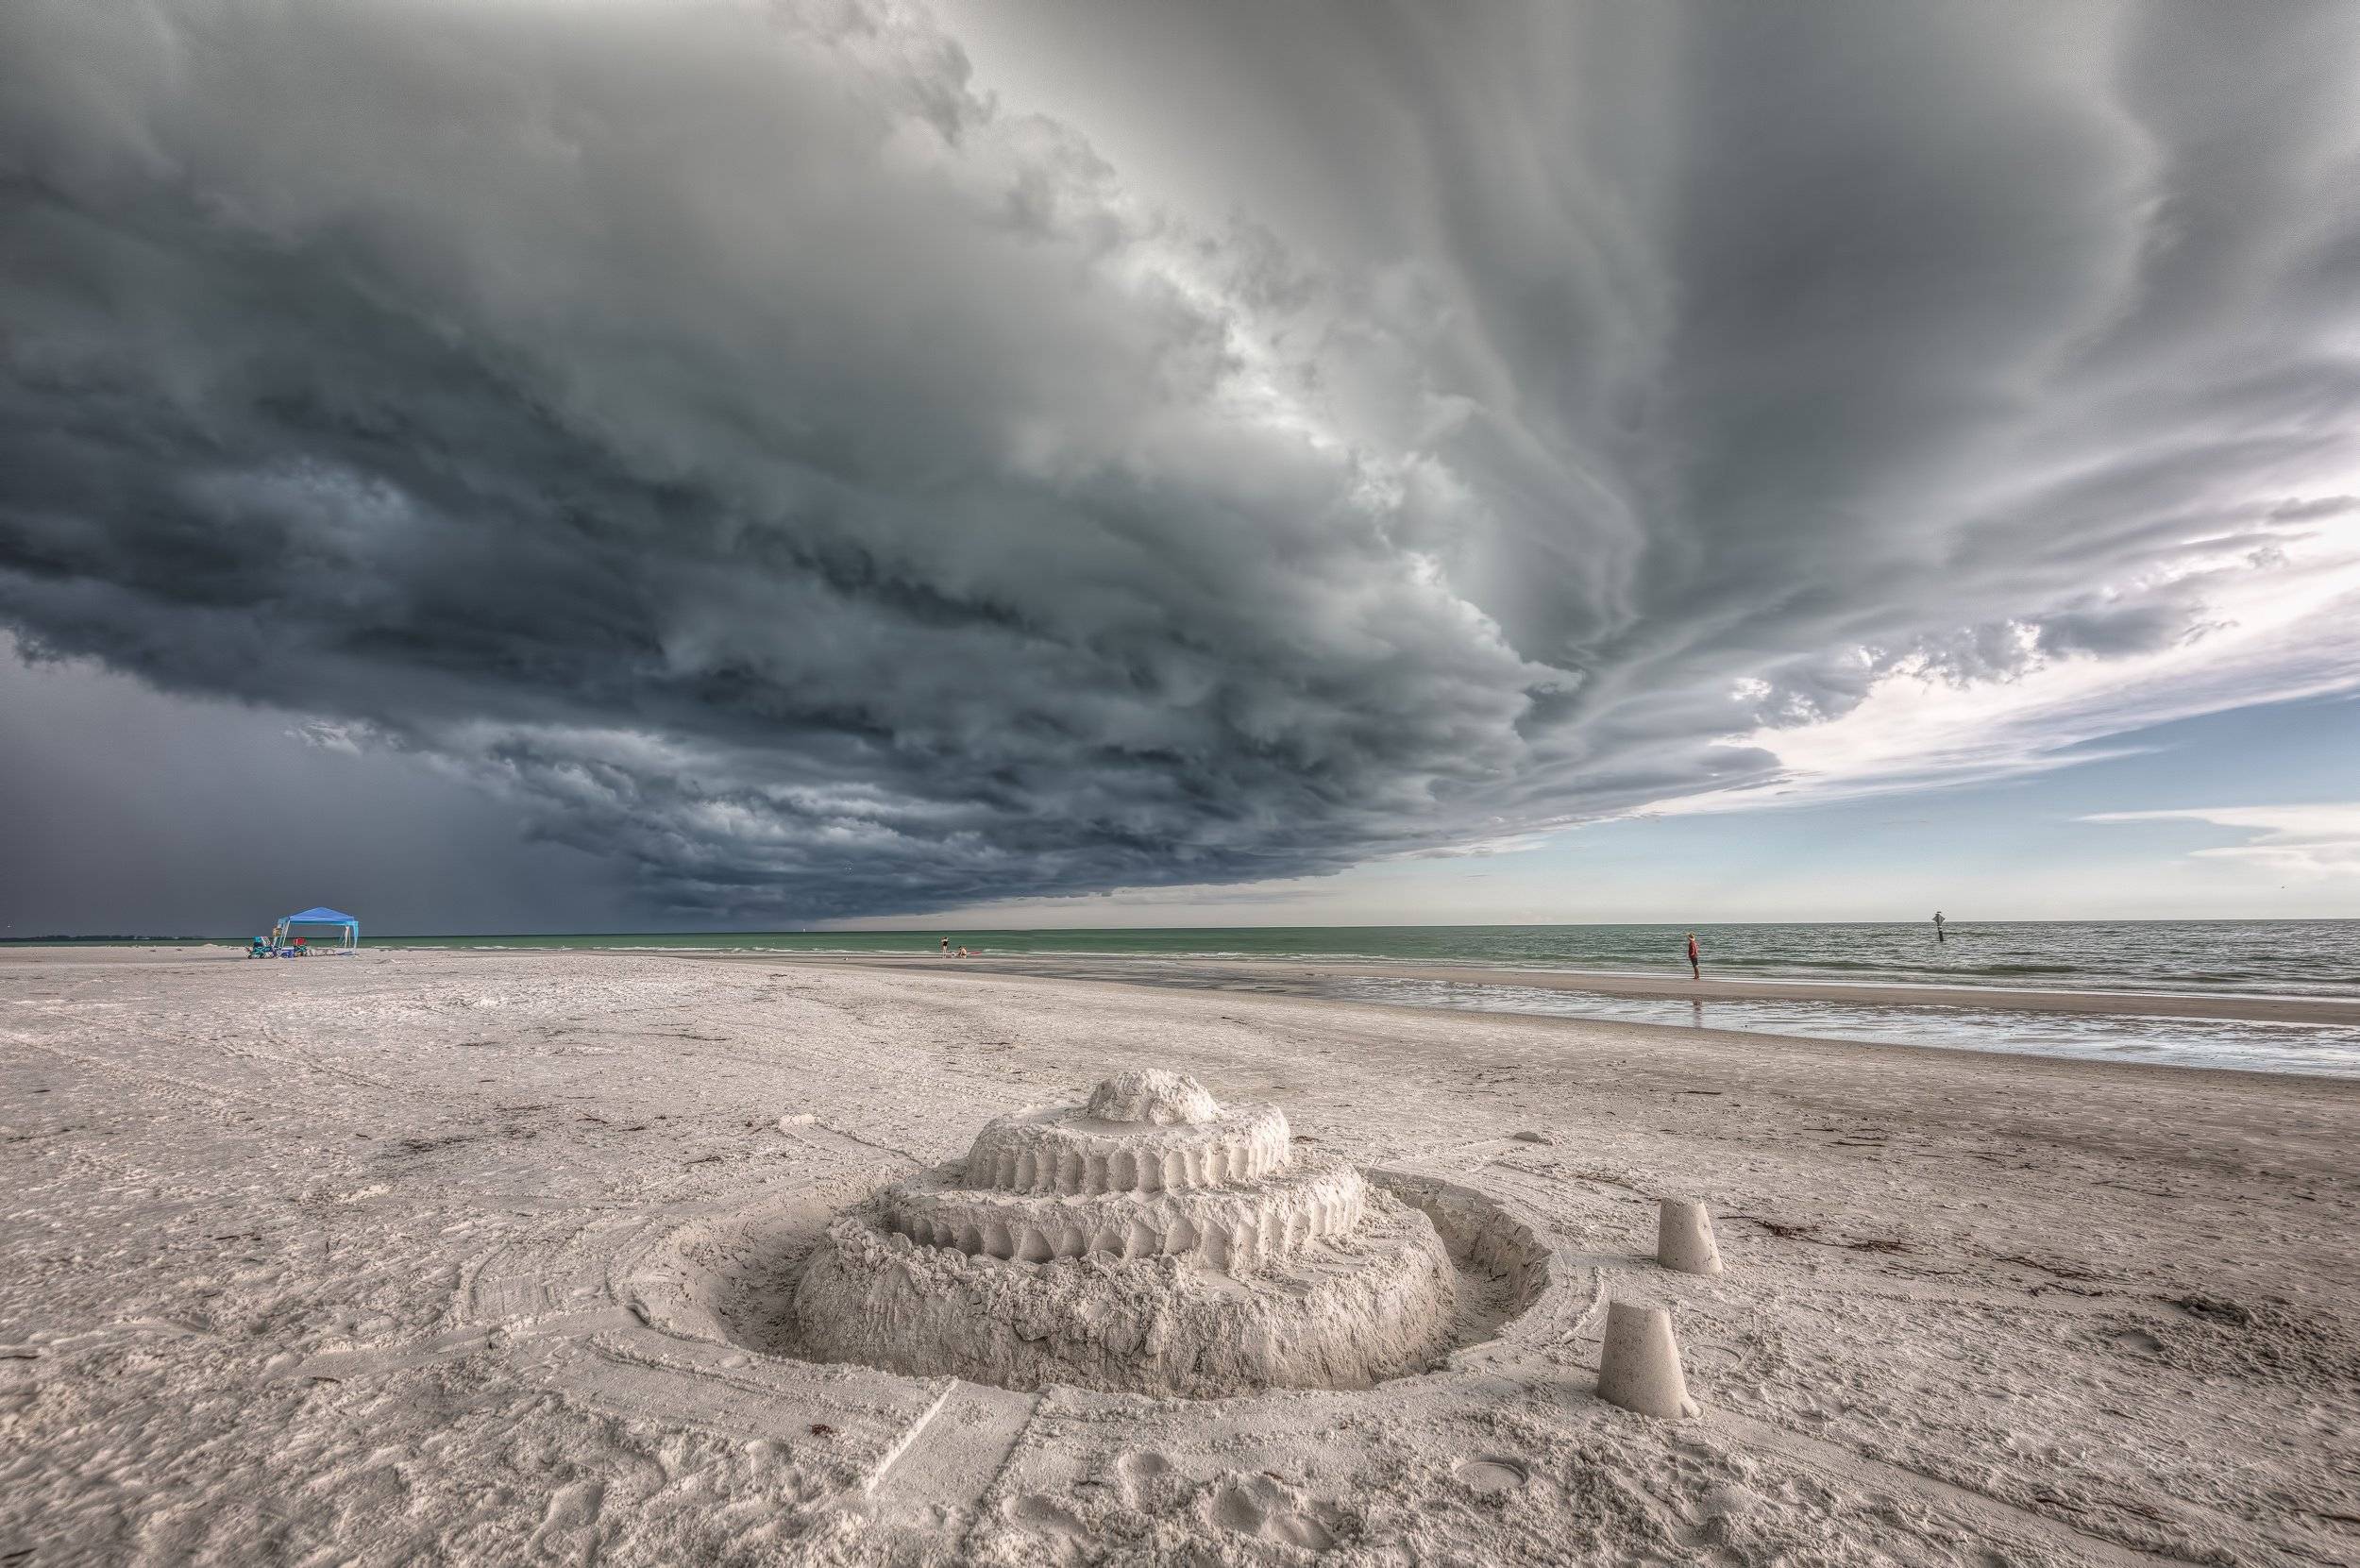 The Storm and the Sandcastle - Siesta Key - Florida by Ronald Kotinsky @rkotinsky